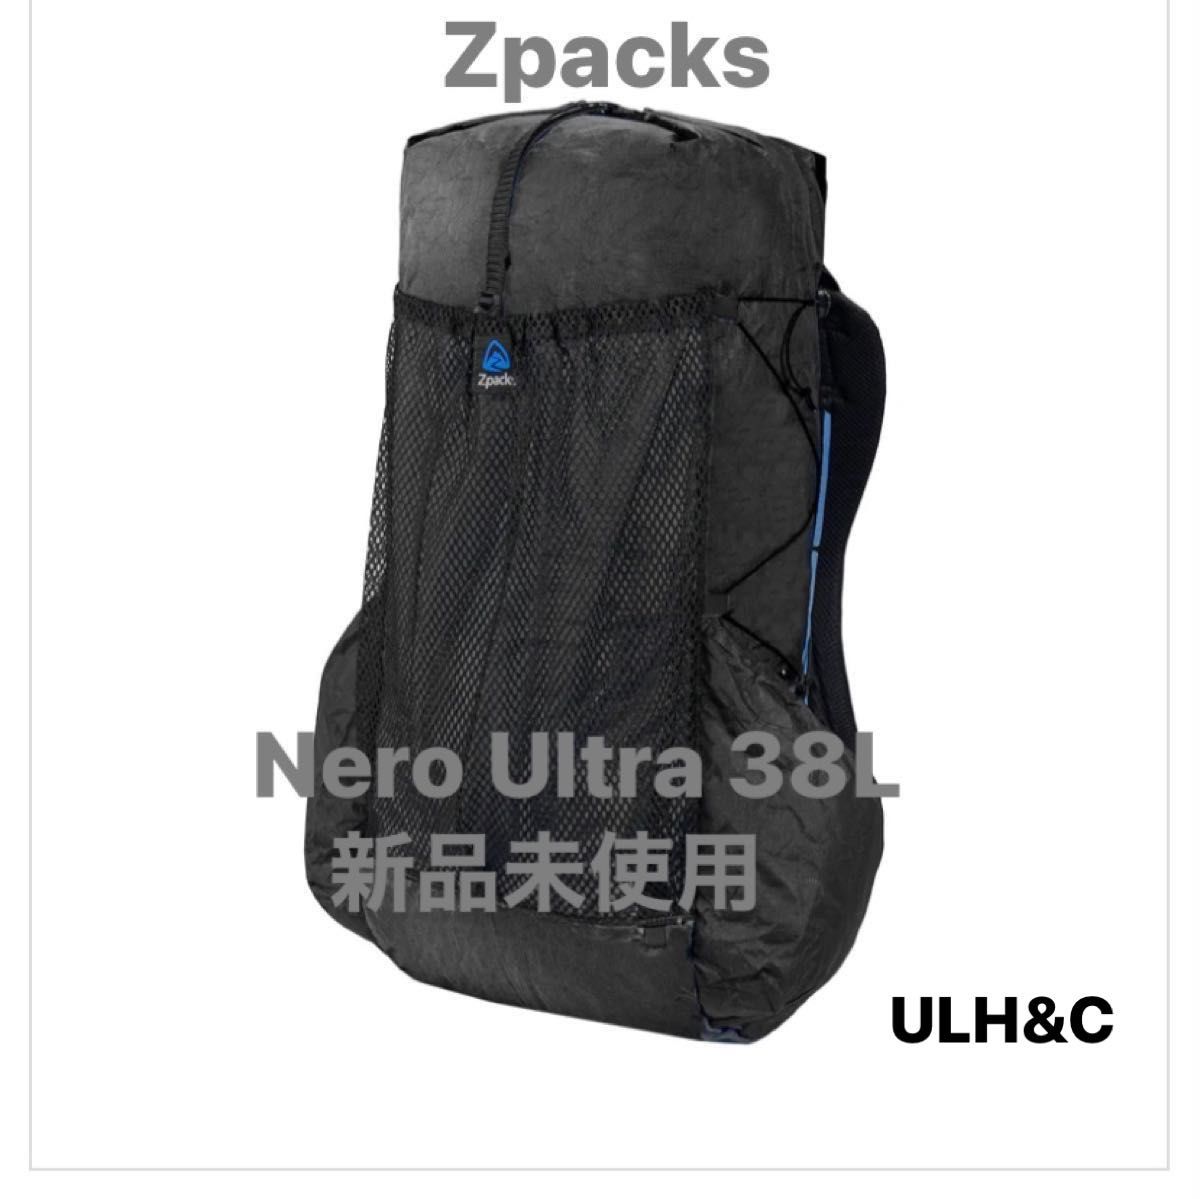 Zpacks ネロ ウルトラ 38L バックパック Nero Ultra ul